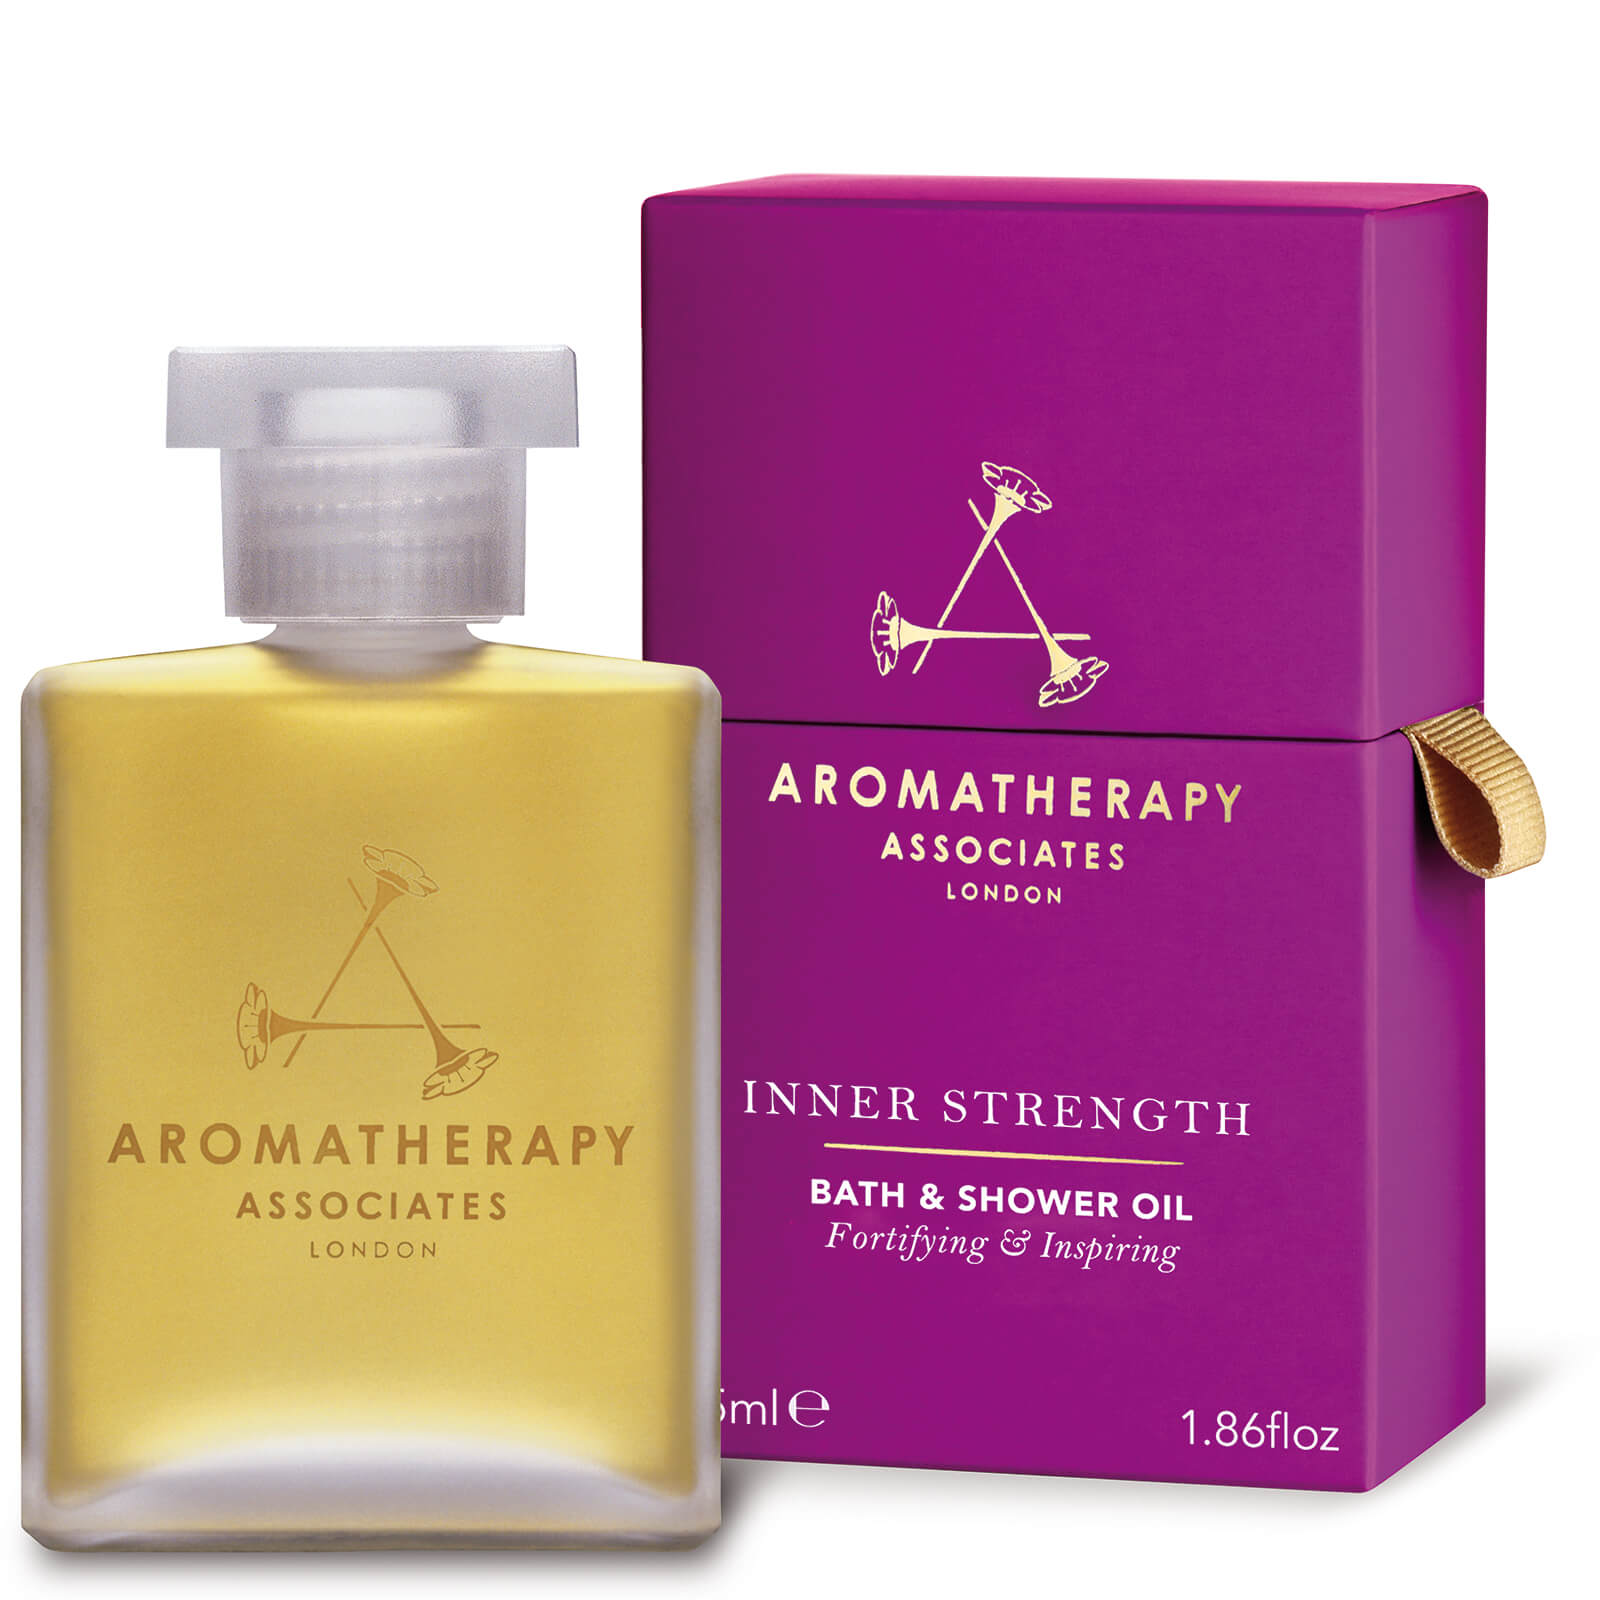 Aromatherapy Associates Inner Strength Bath & Shower Oil 3ml